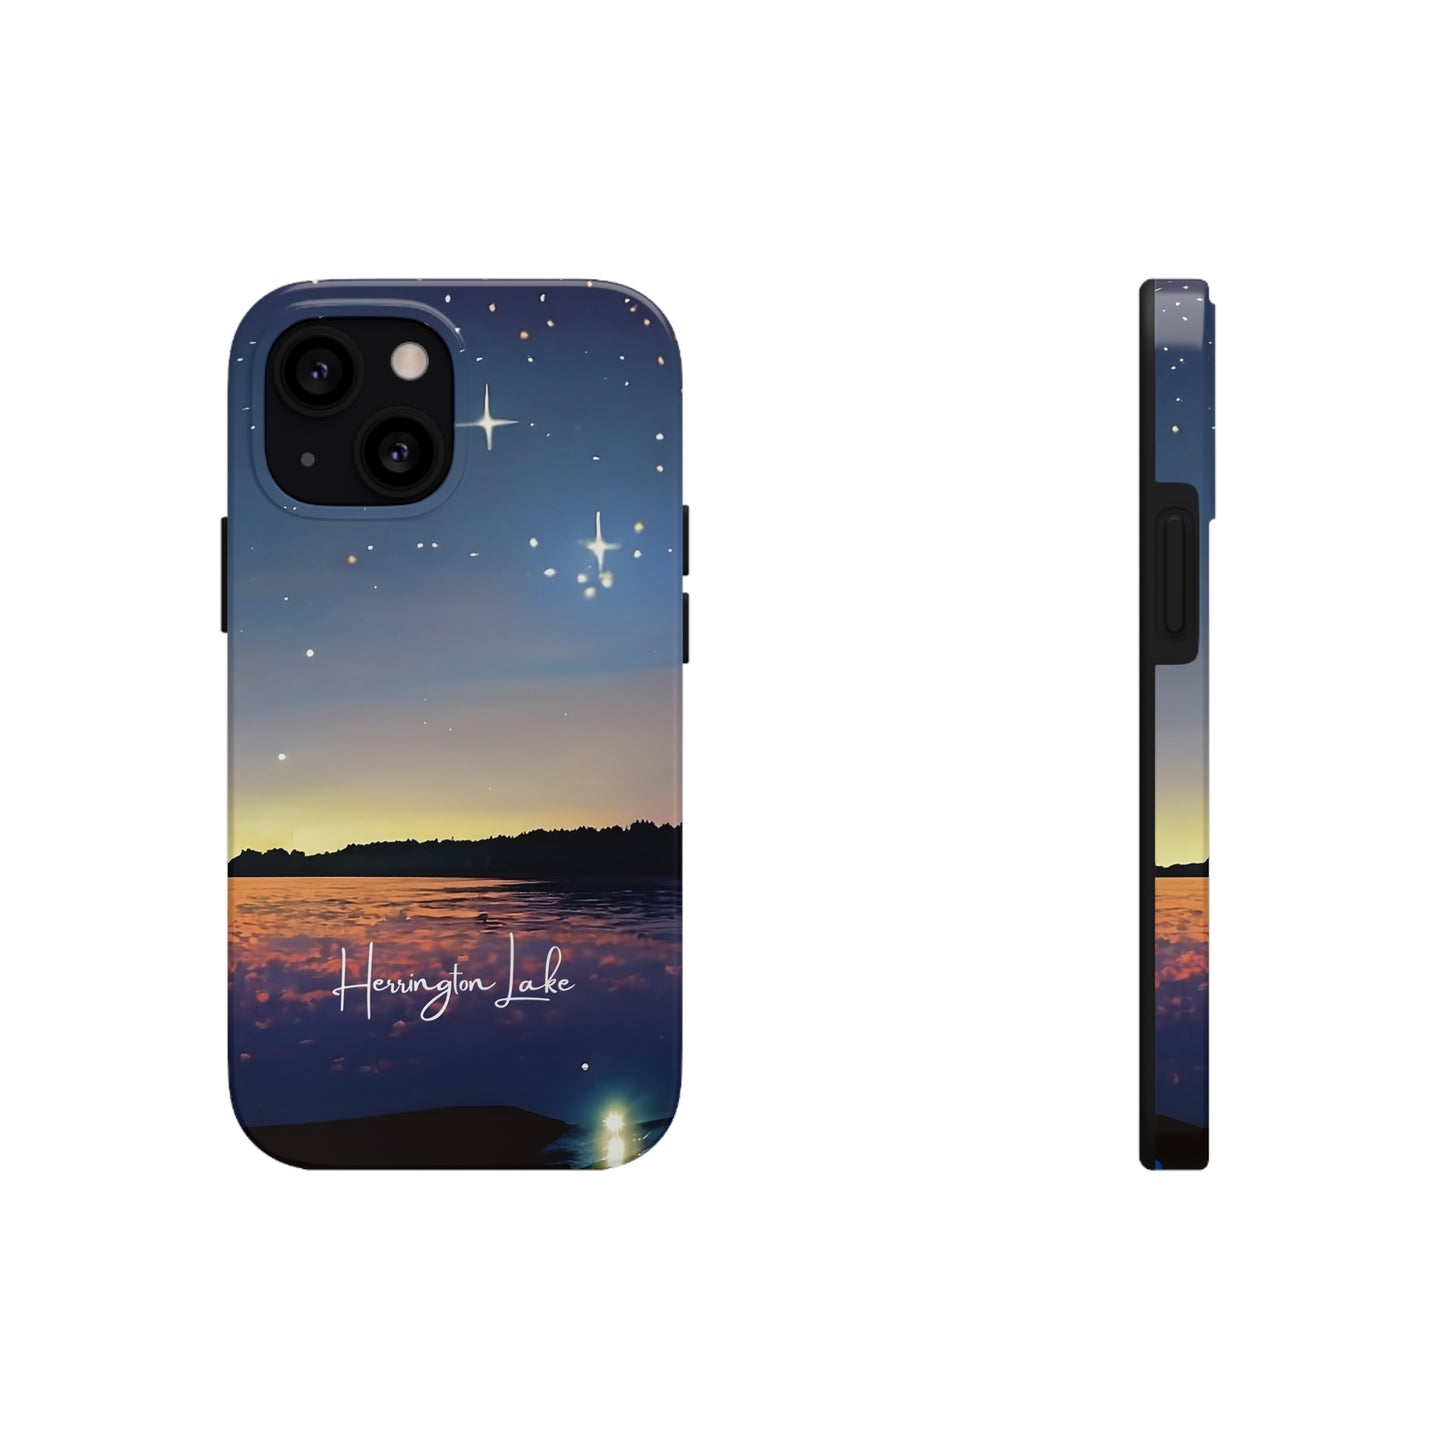 Herrington Lake "Starry Night" Tough Phone Cases